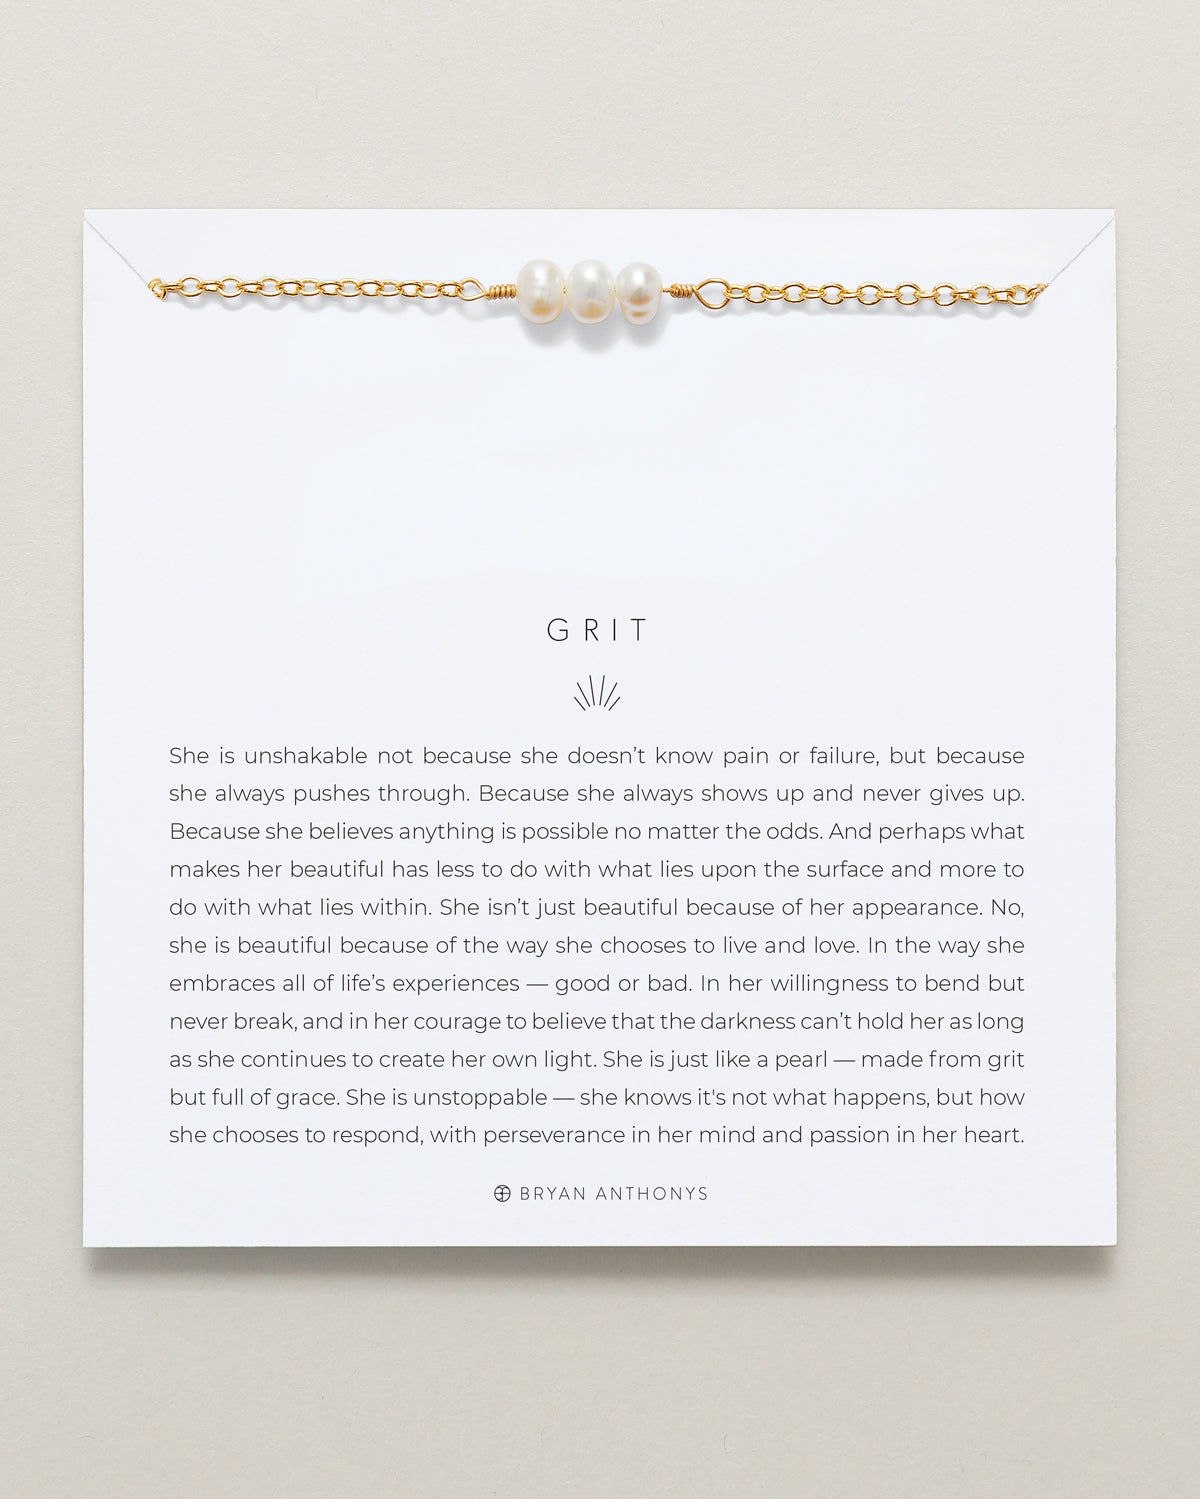 Bryan Anthonys Grit Gold Chain Bracelet On Card